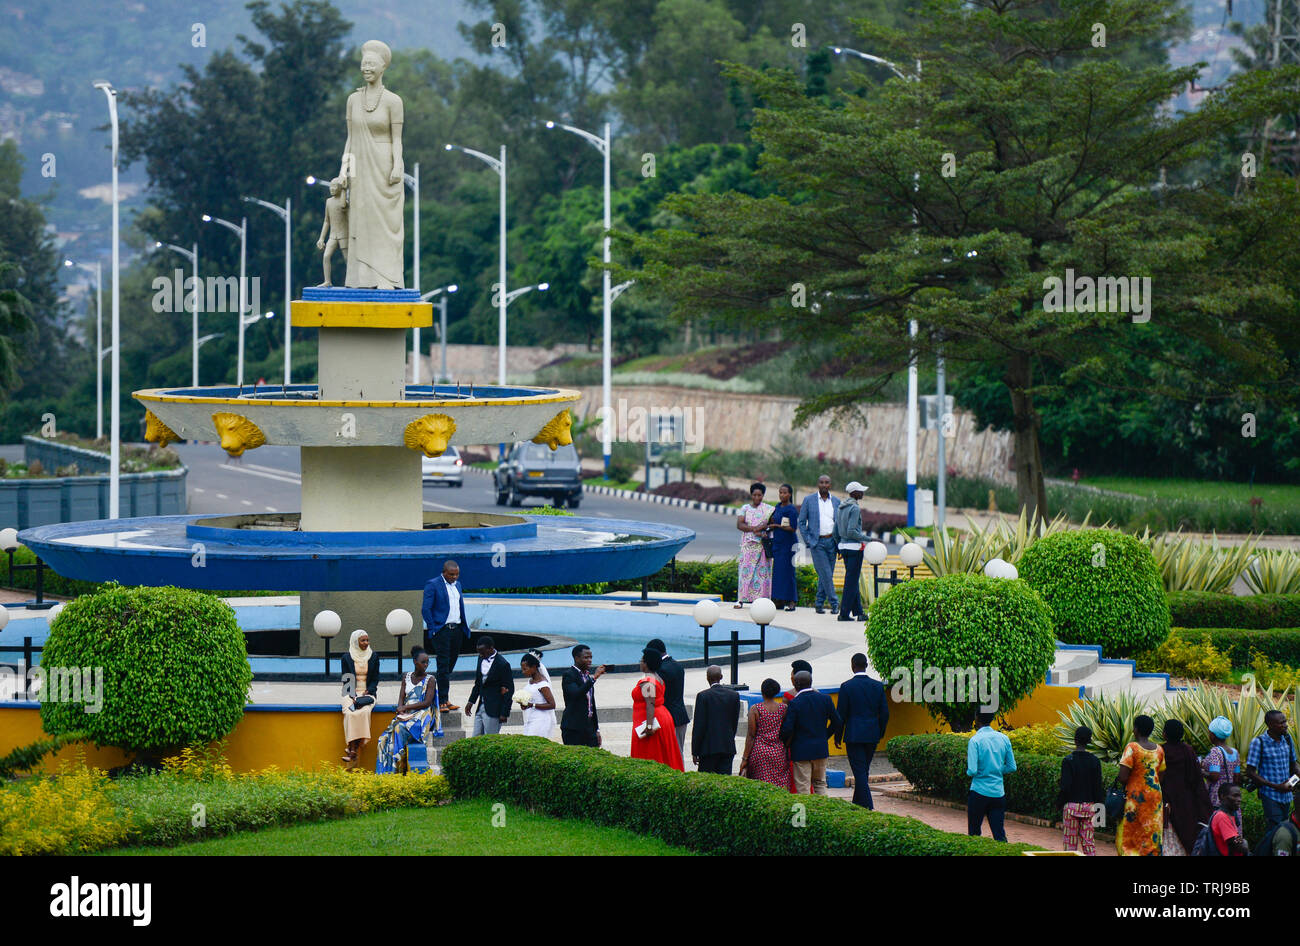 Il Ruanda, Kigali, park presso il Convention Center, spot per film e photoshooting per weeddings / RUANDA, Kigali, Parco und Springbrunnen vor dem Convention Center, Kongresszentrum , Hochzeitspaare beim Fotoshooting Foto Stock